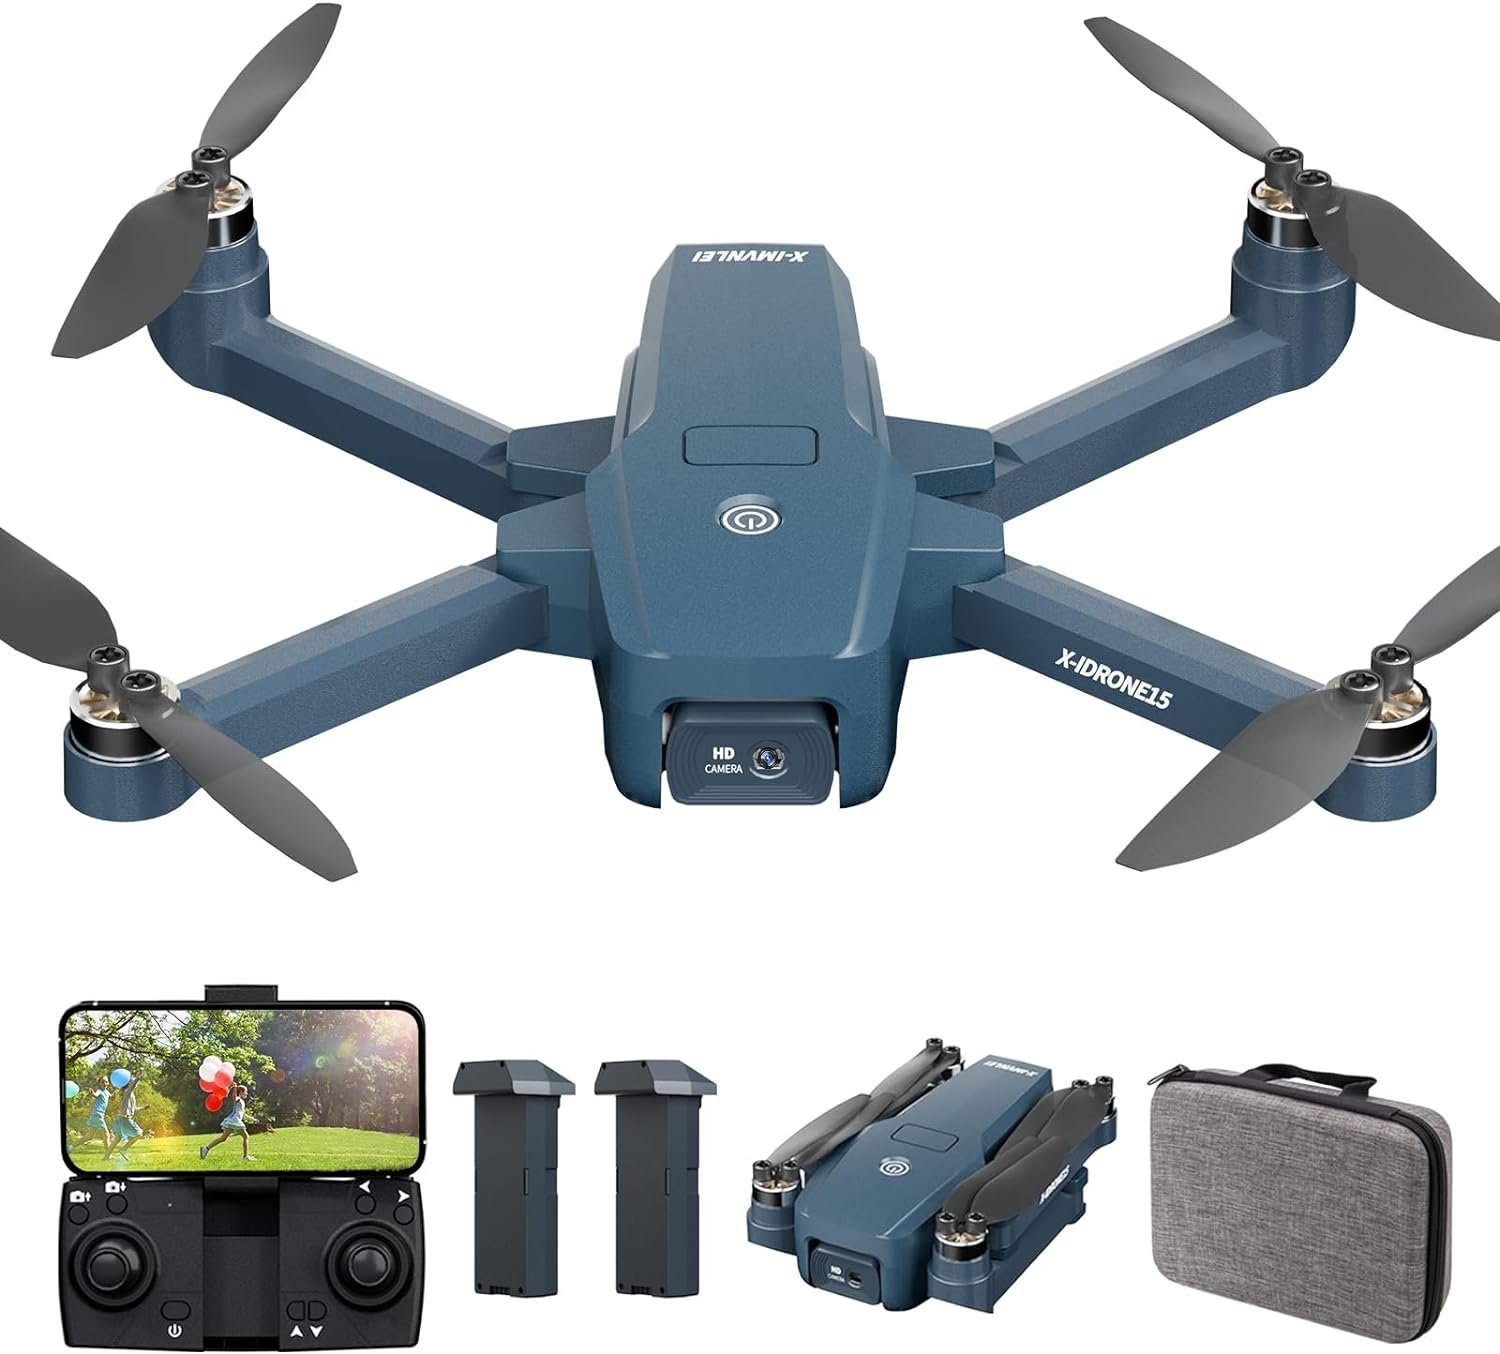 X-IMVNLEI Drohne (1080P, Erwachsene RC-Quadcopter) Professional FPV Fernbedienung WiFi Video 5G